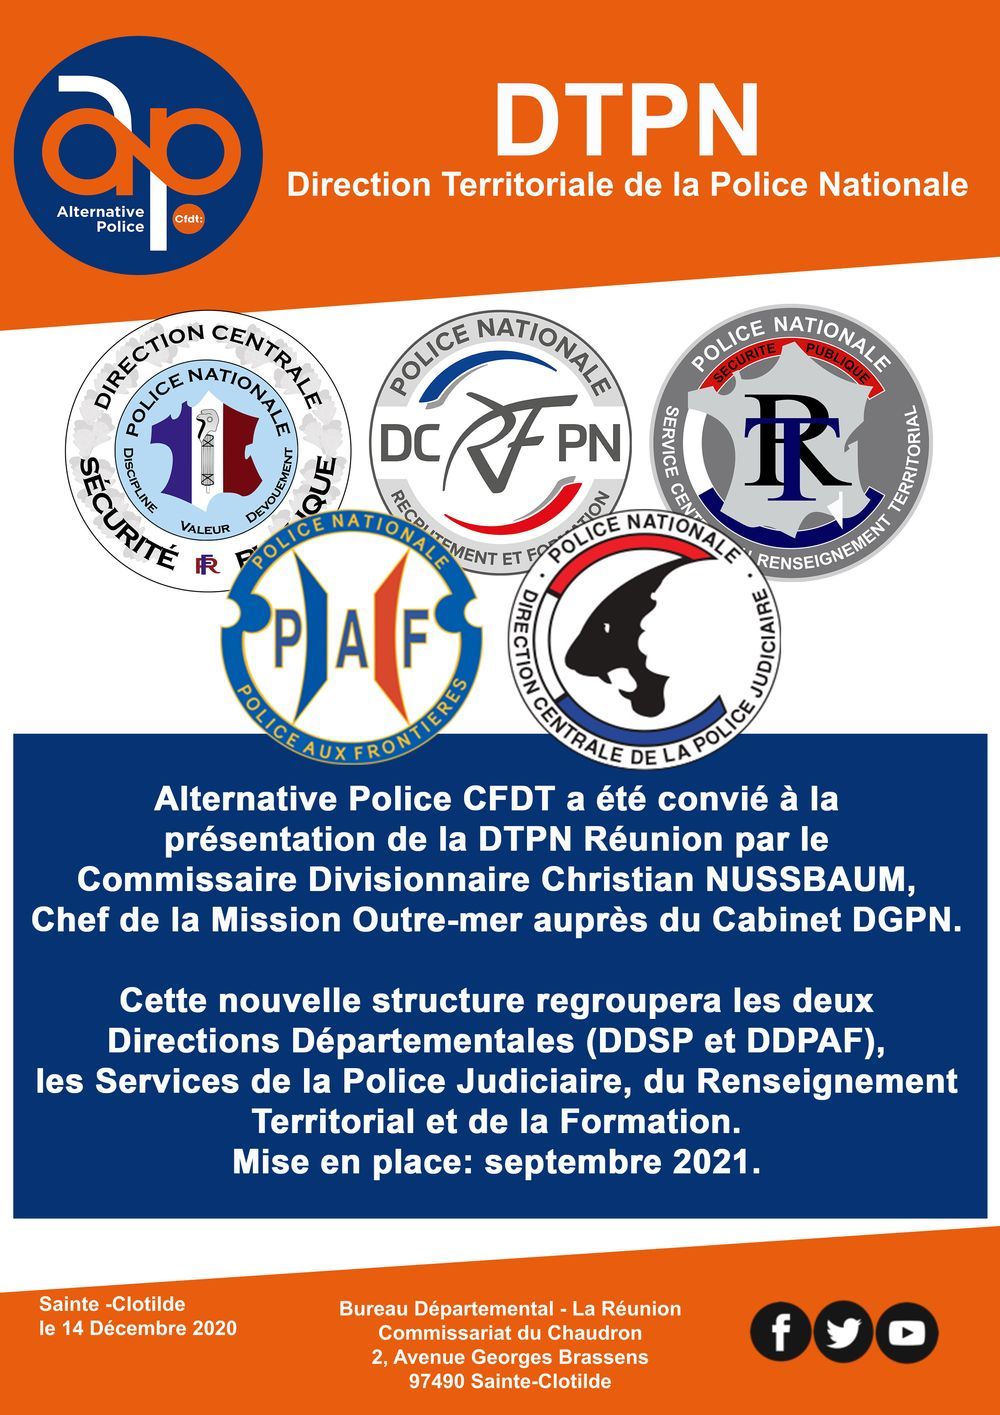 DTPN : Direction Territoriale de la Police Nationale